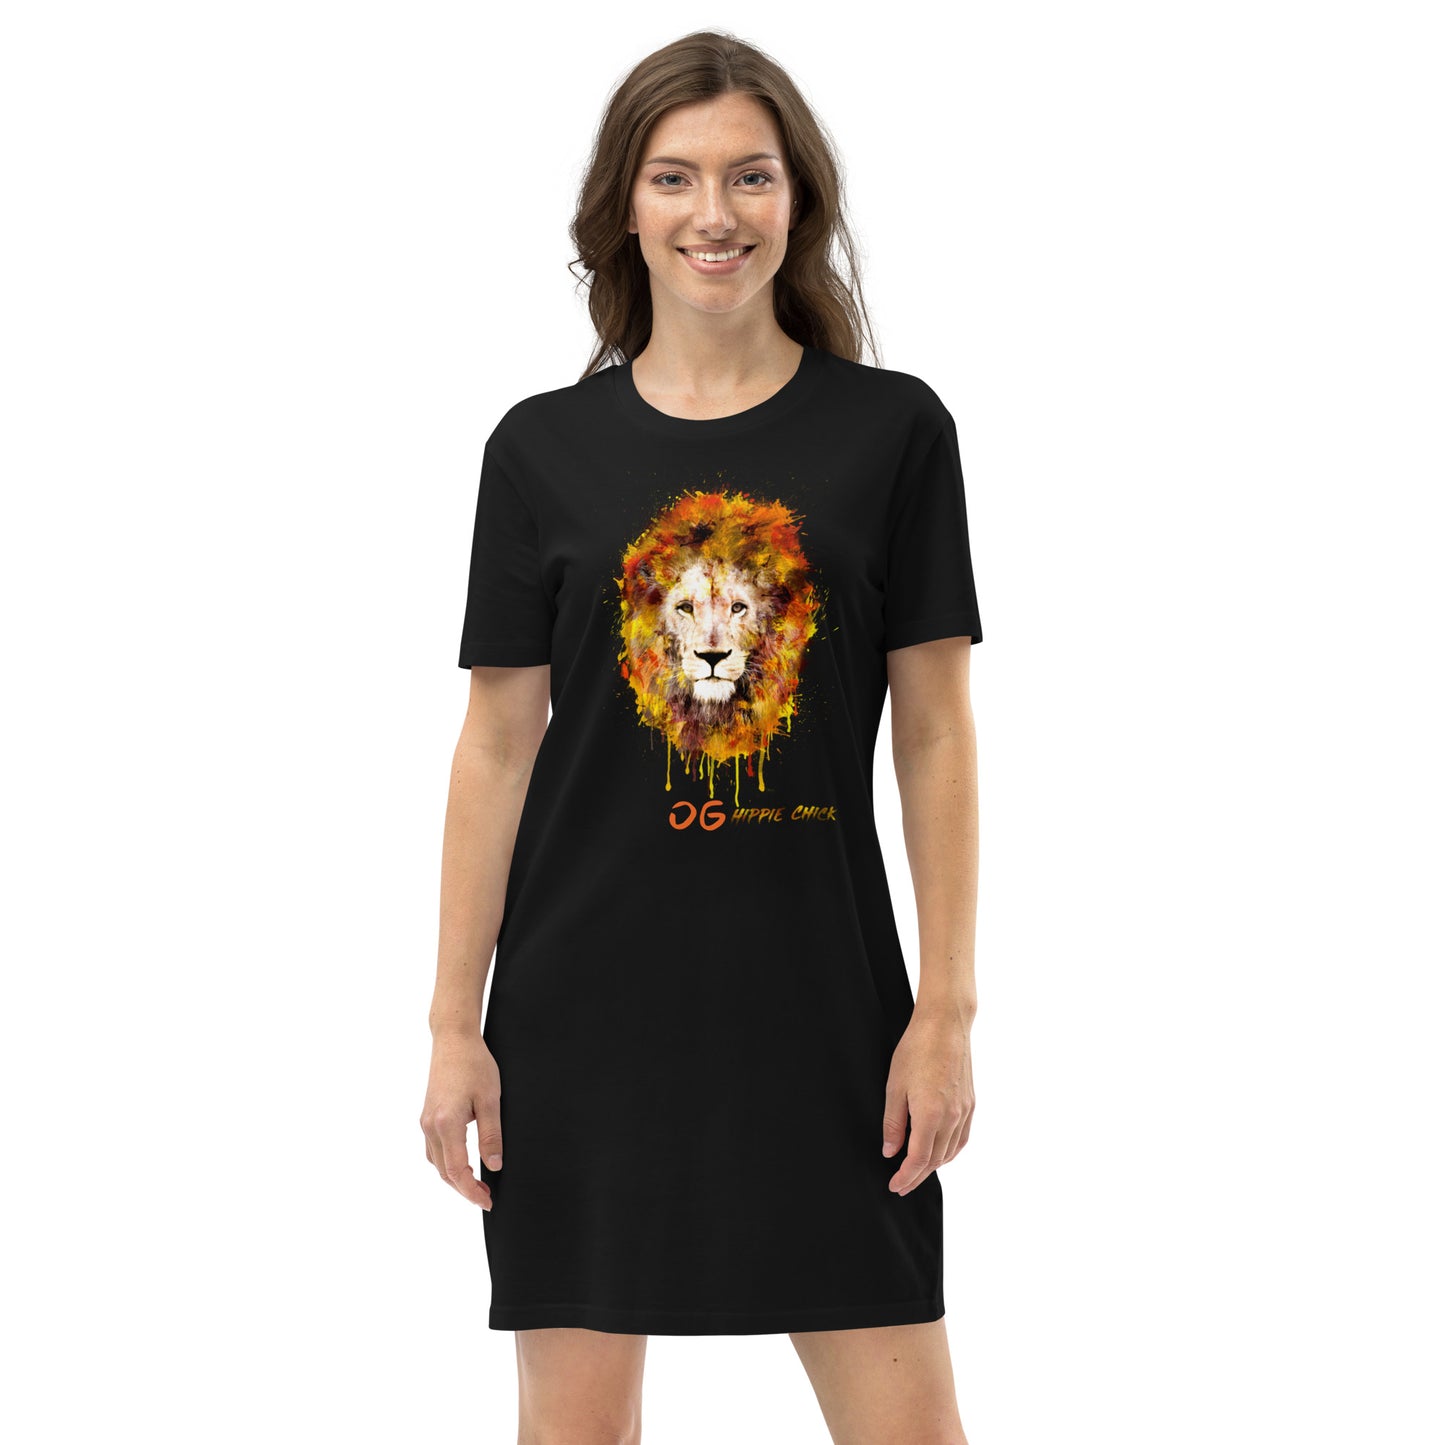 Robe T-shirt (Lion devant)